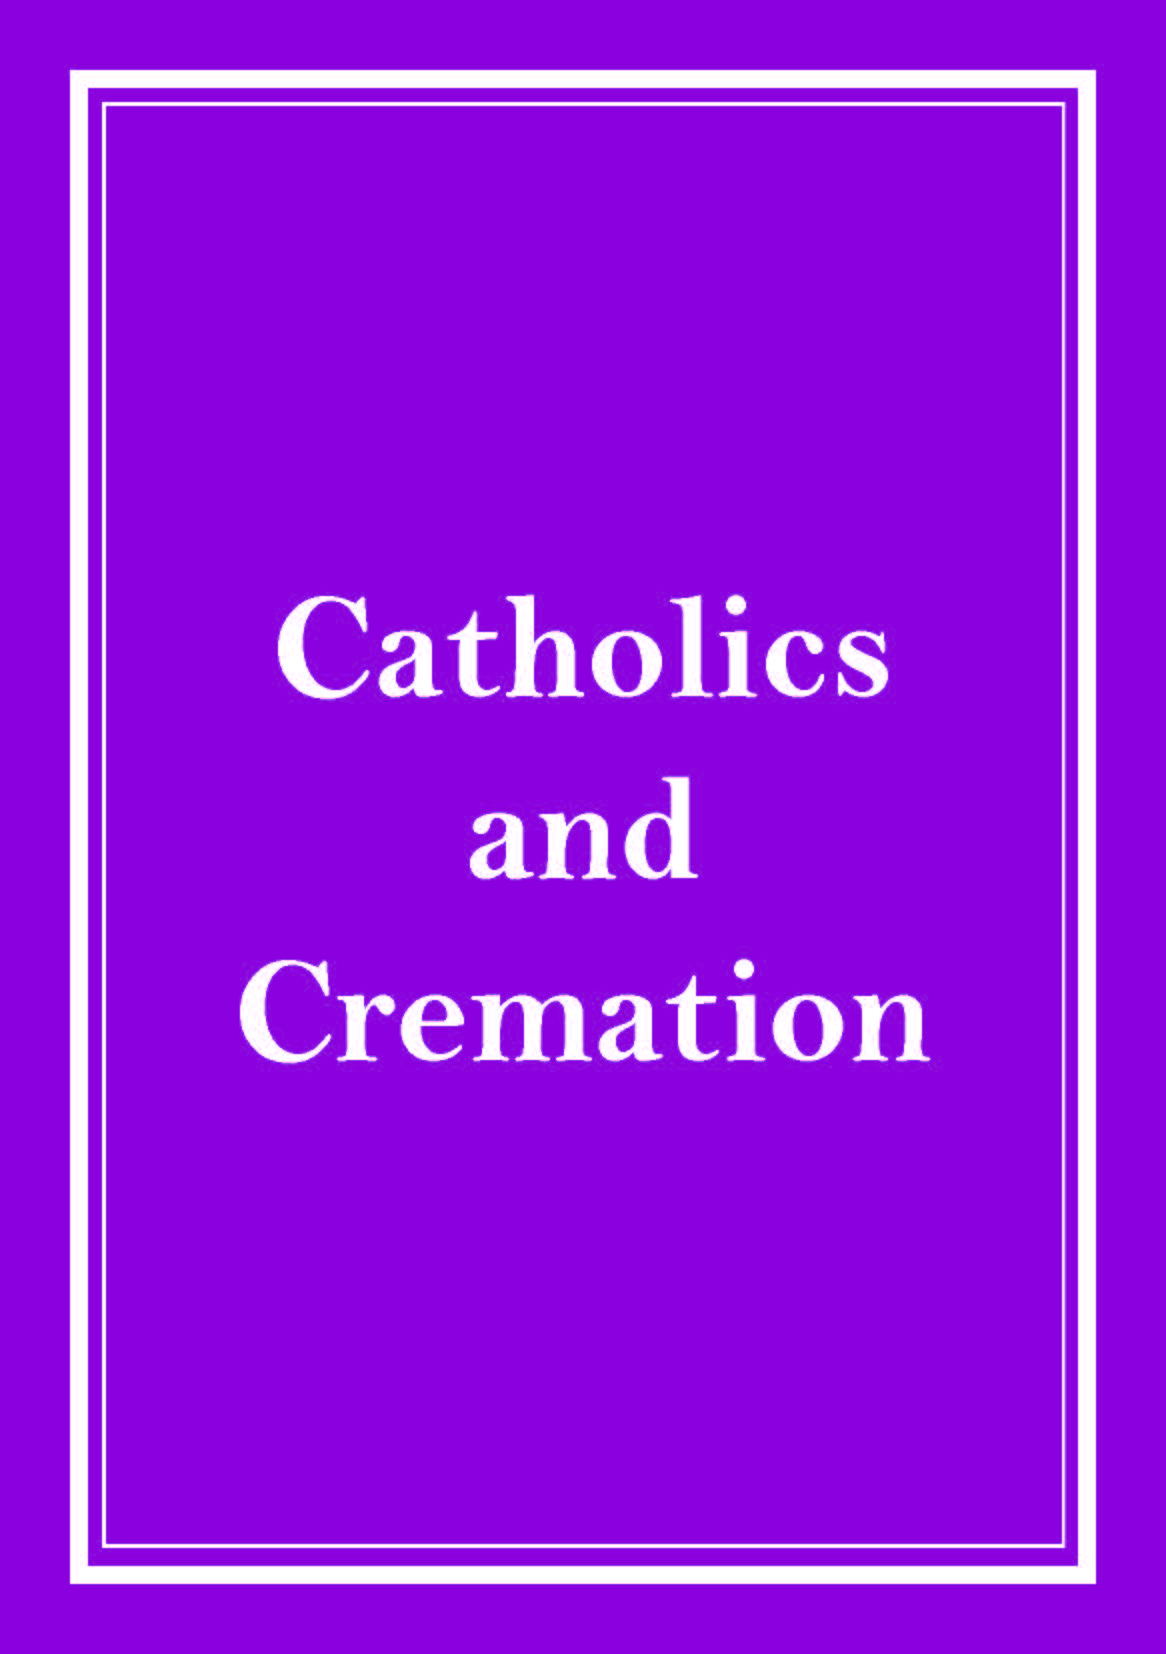 Image of Catholics and Cremation publication